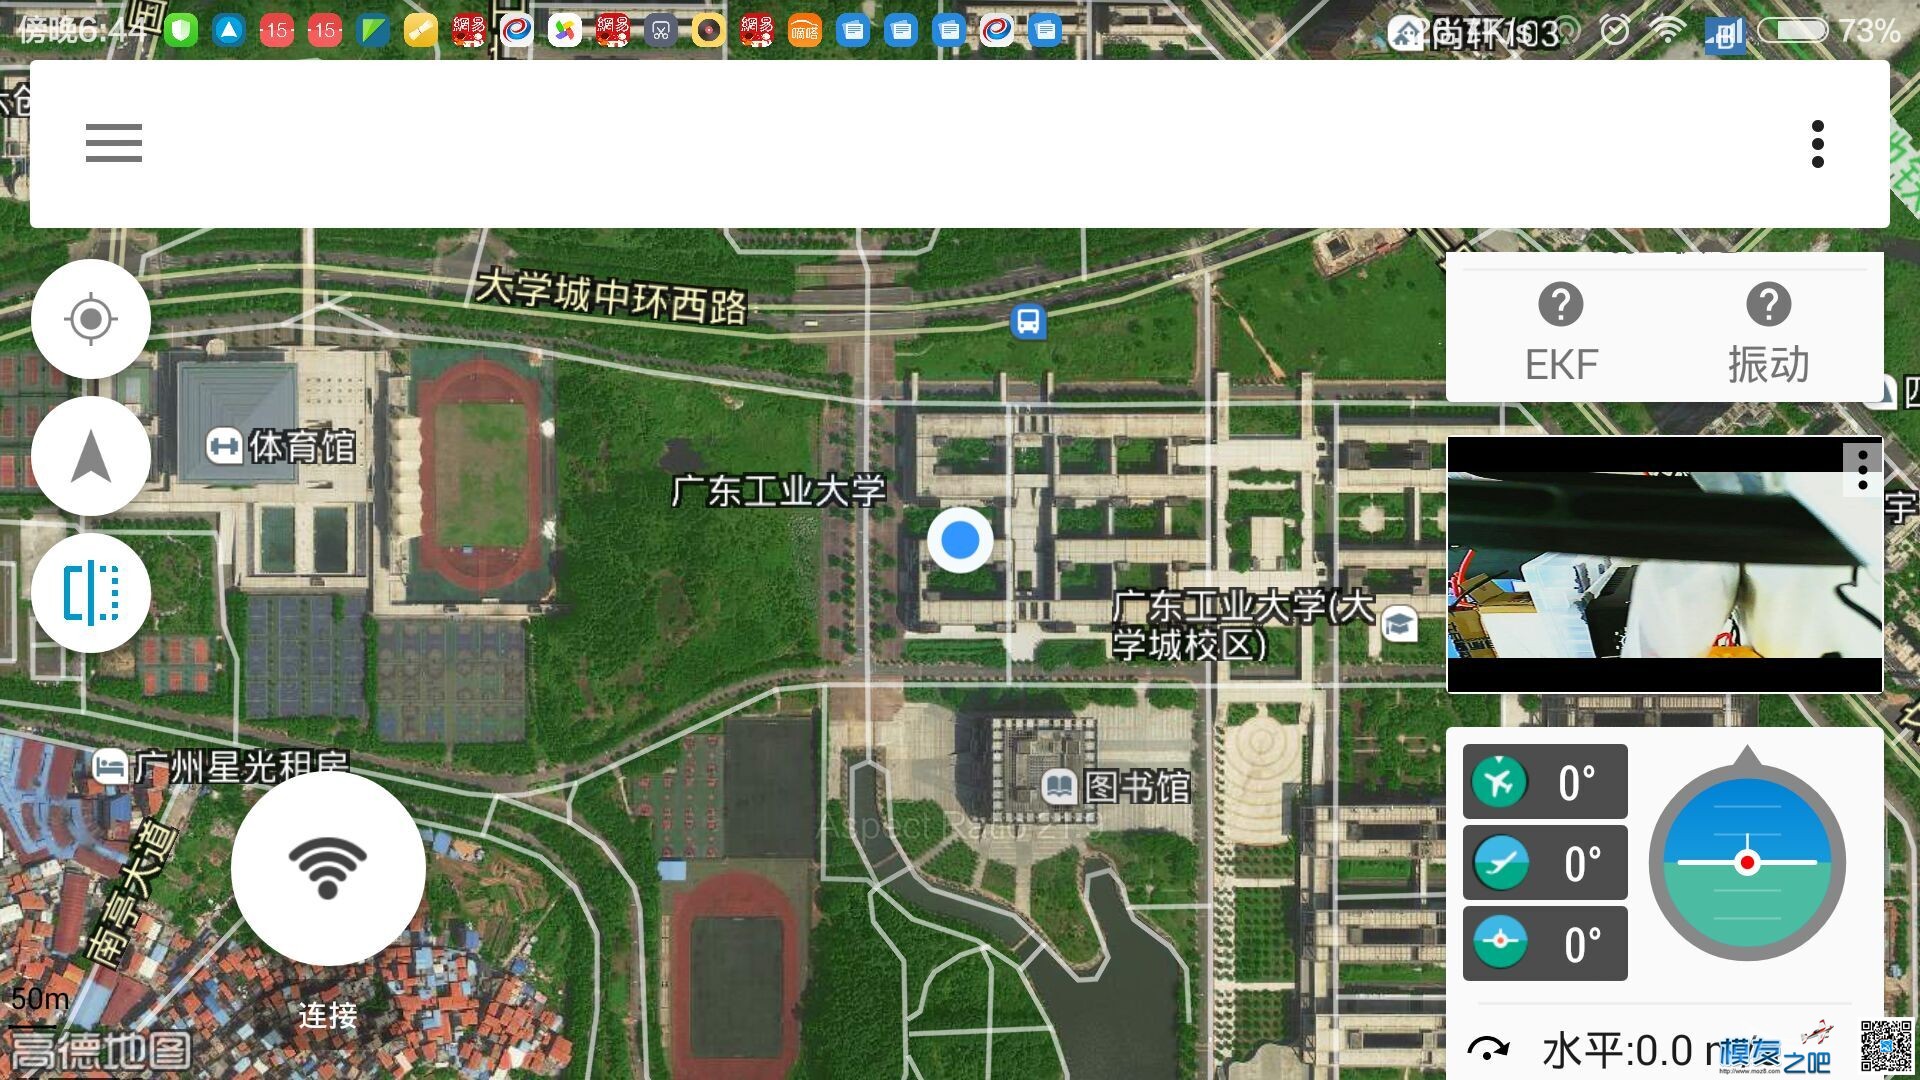 【APM Android增强型地面站】 图传,飞控,开源,大疆,地面站 作者:质的飞跃 1510 